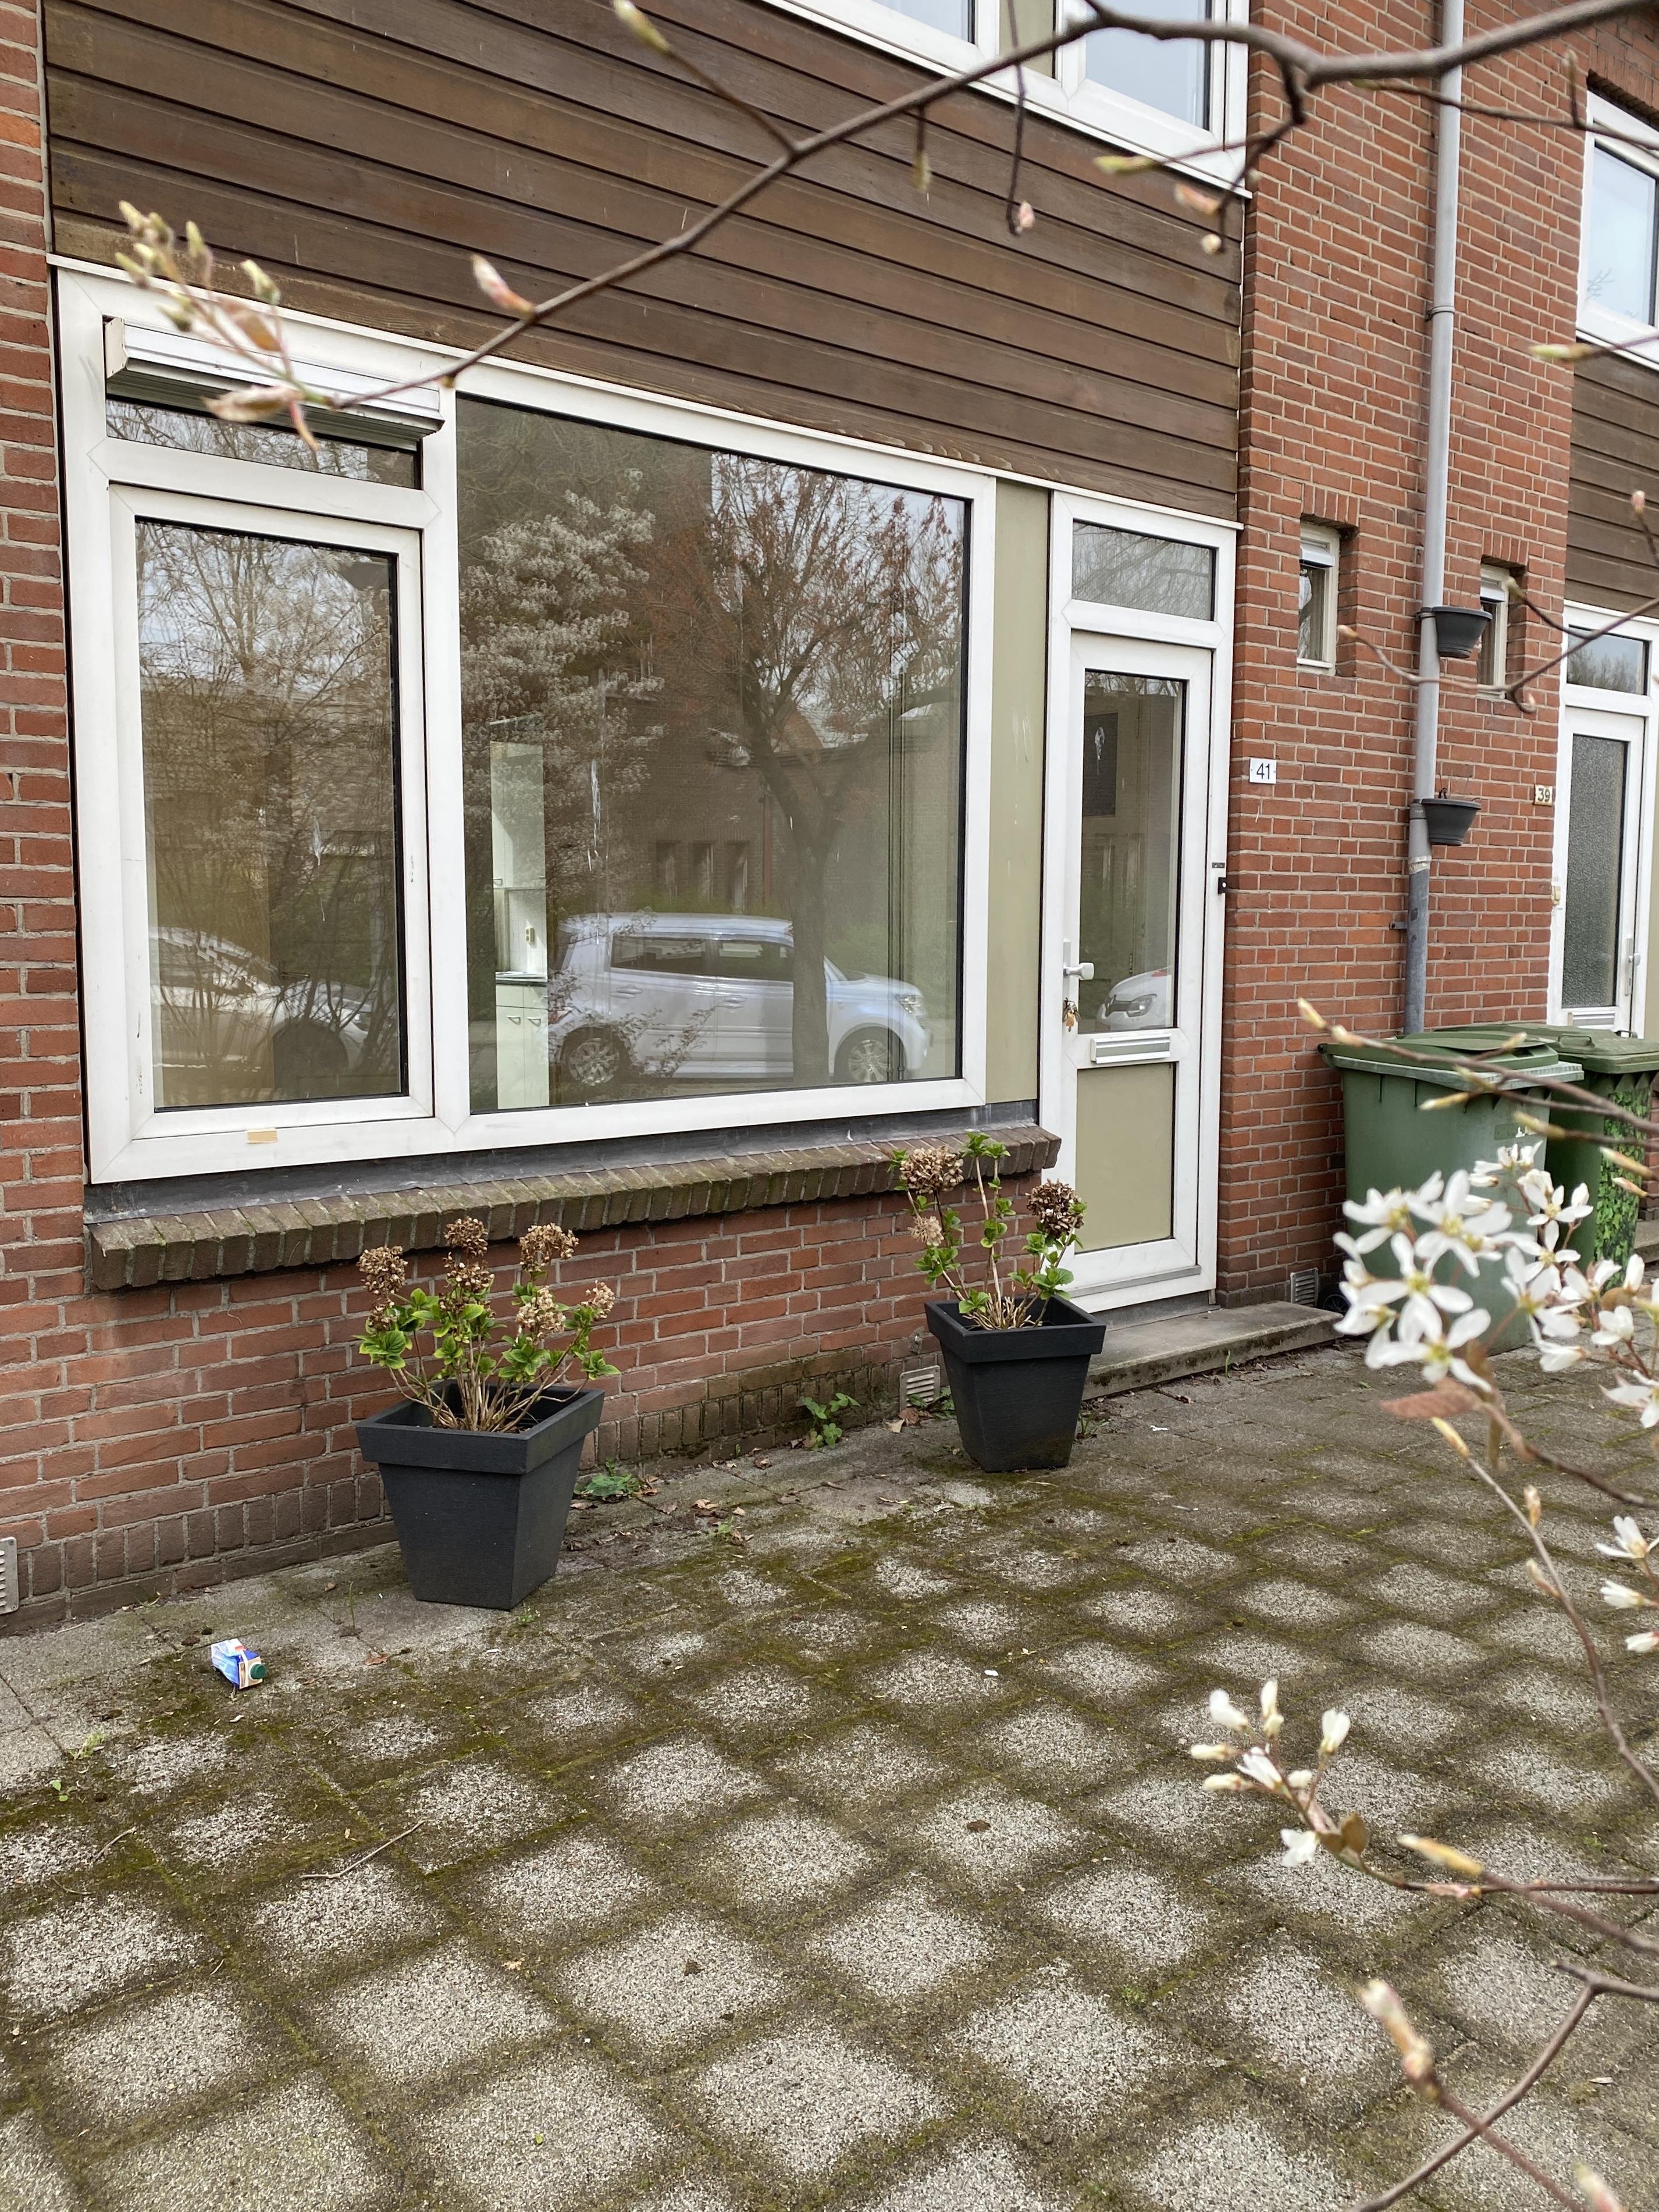 Streefkerkstraat 41, 3089 PV Rotterdam, Nederland